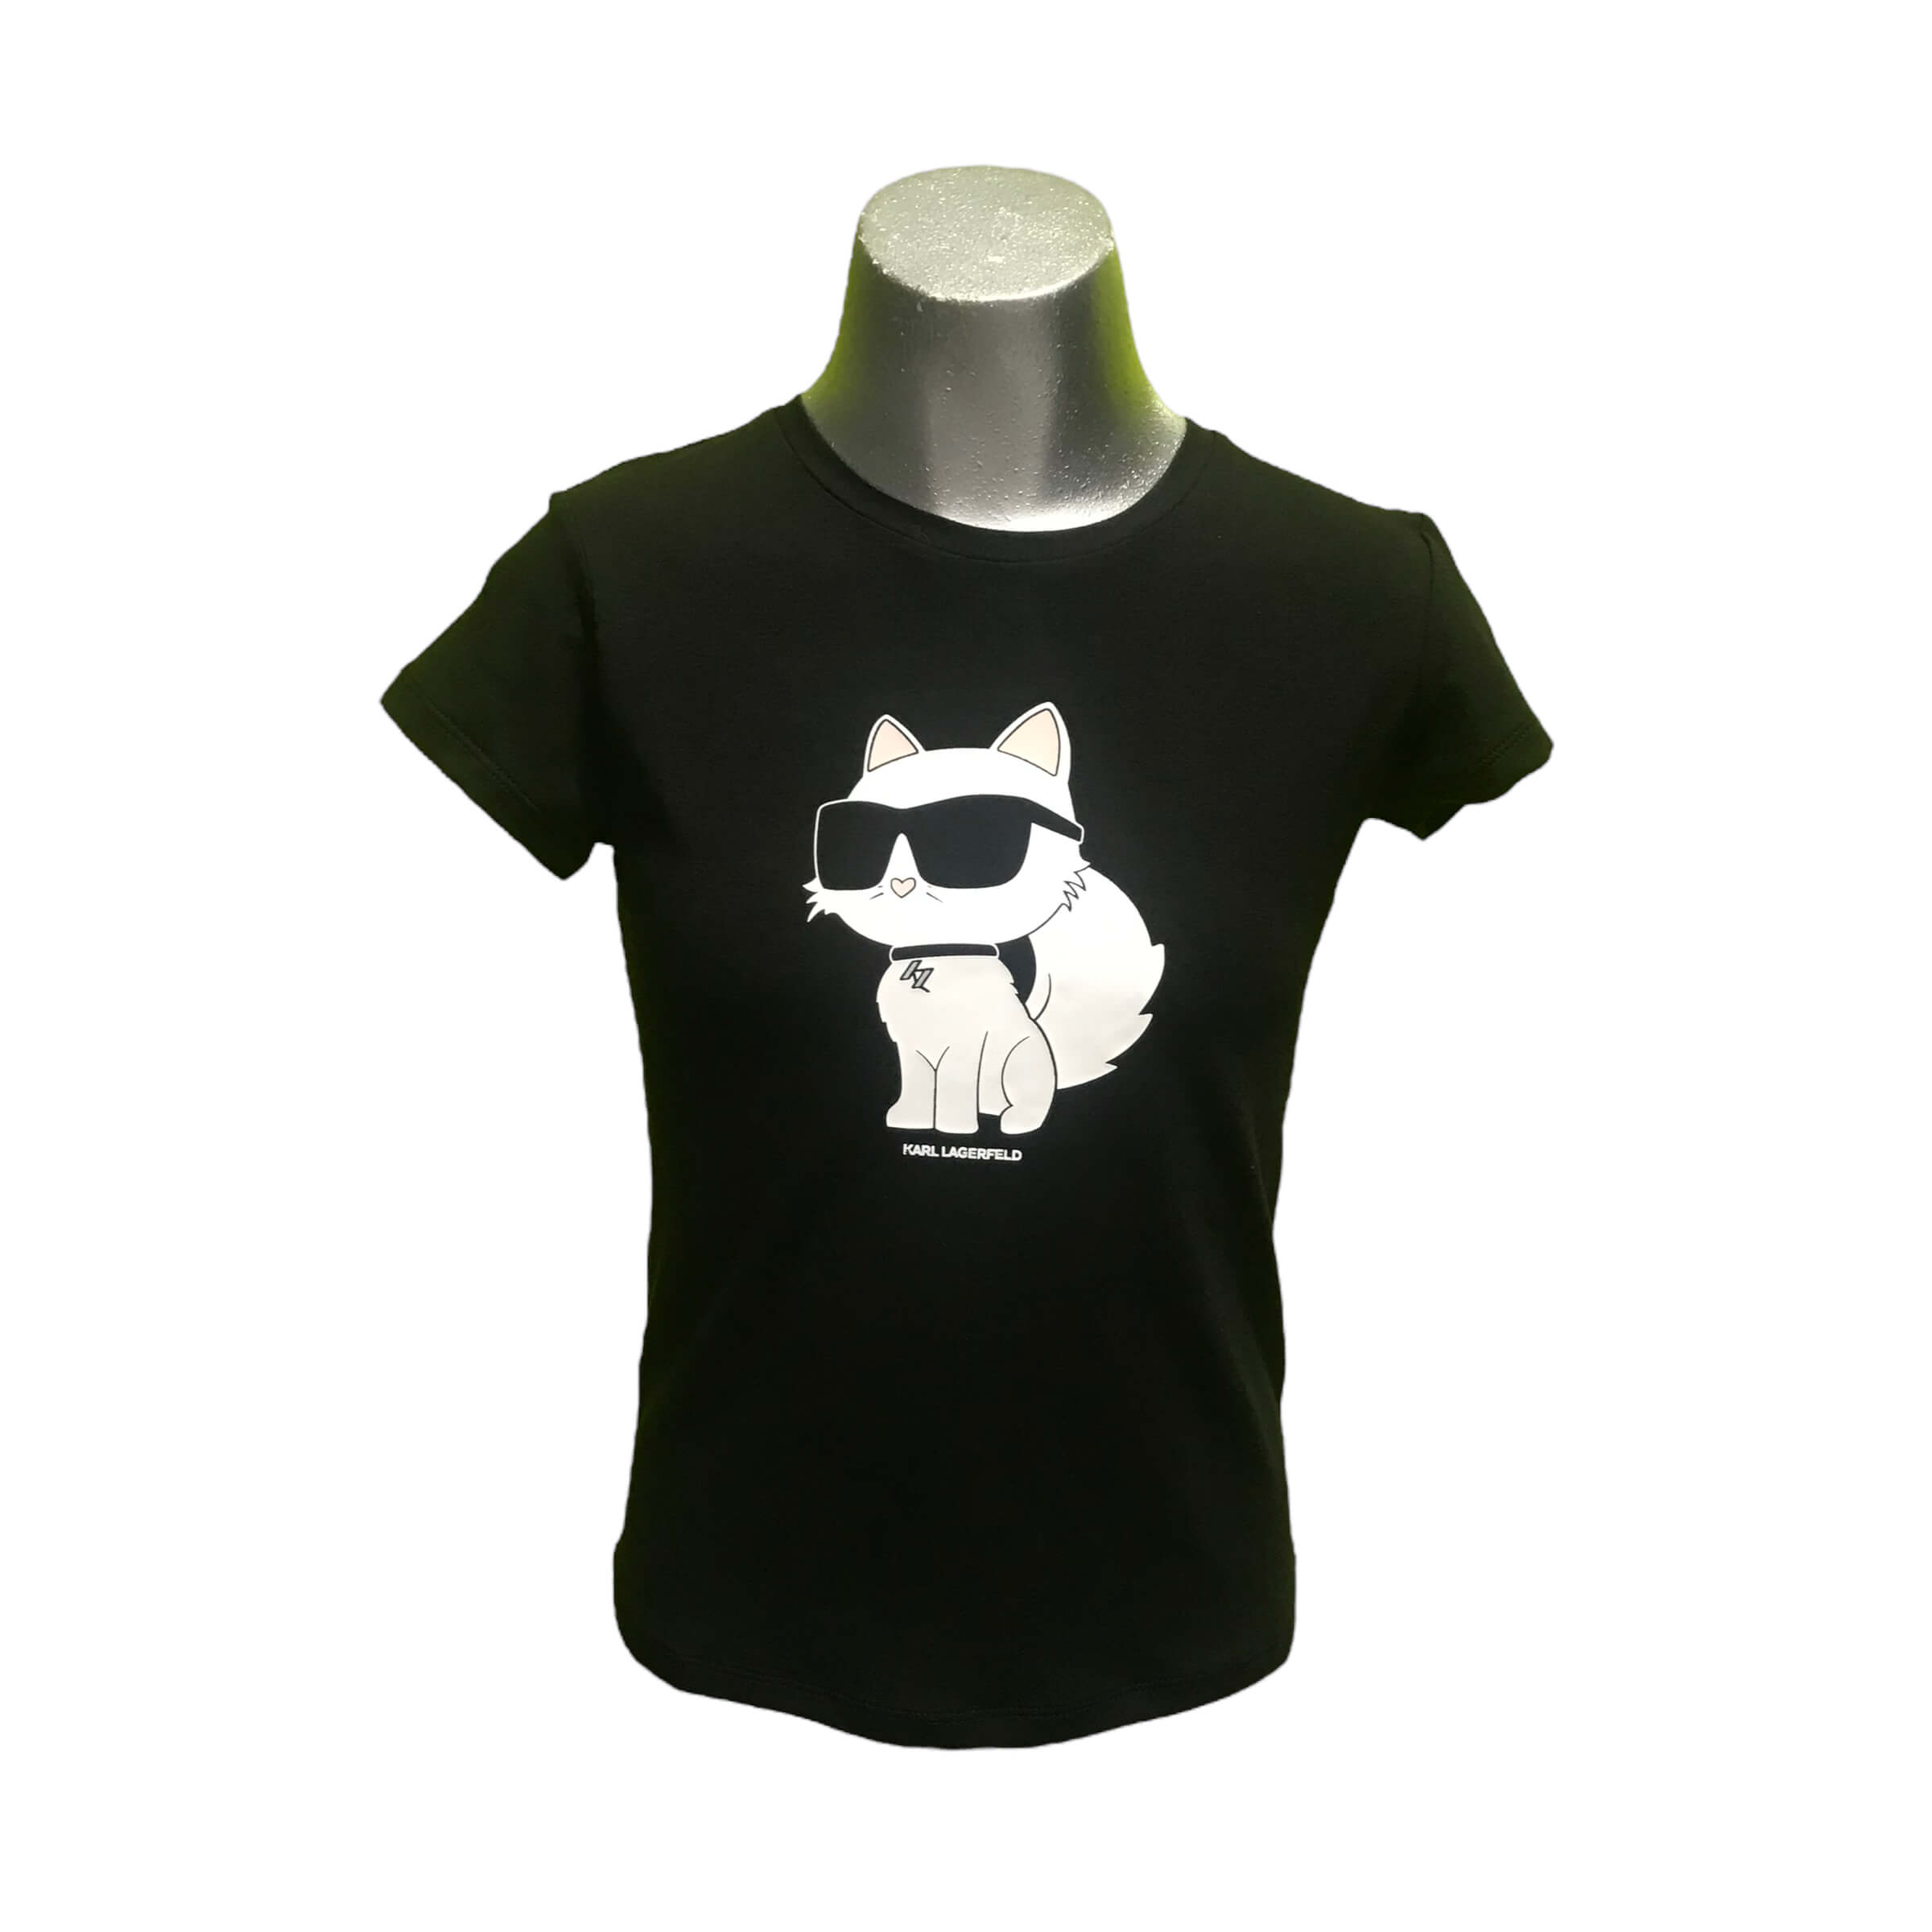 Karl Lagerfeld Camiseta chica estampado gato Choupette